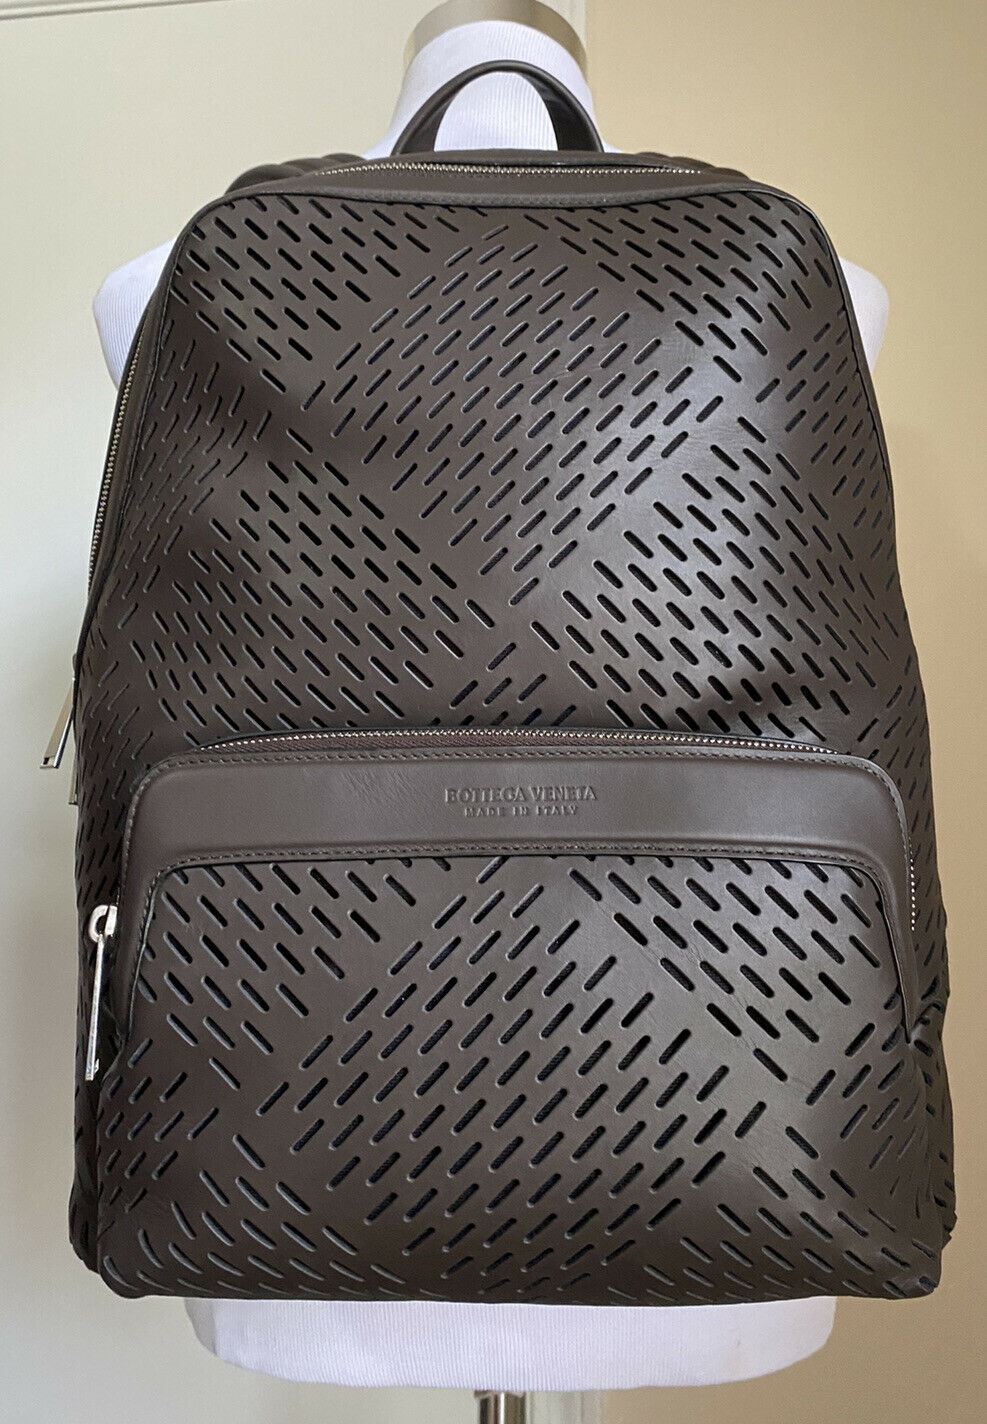 New $3500 Bottega Veneta leather Backpack Marco Polo 585931 VMAV2 DK Brown Italy